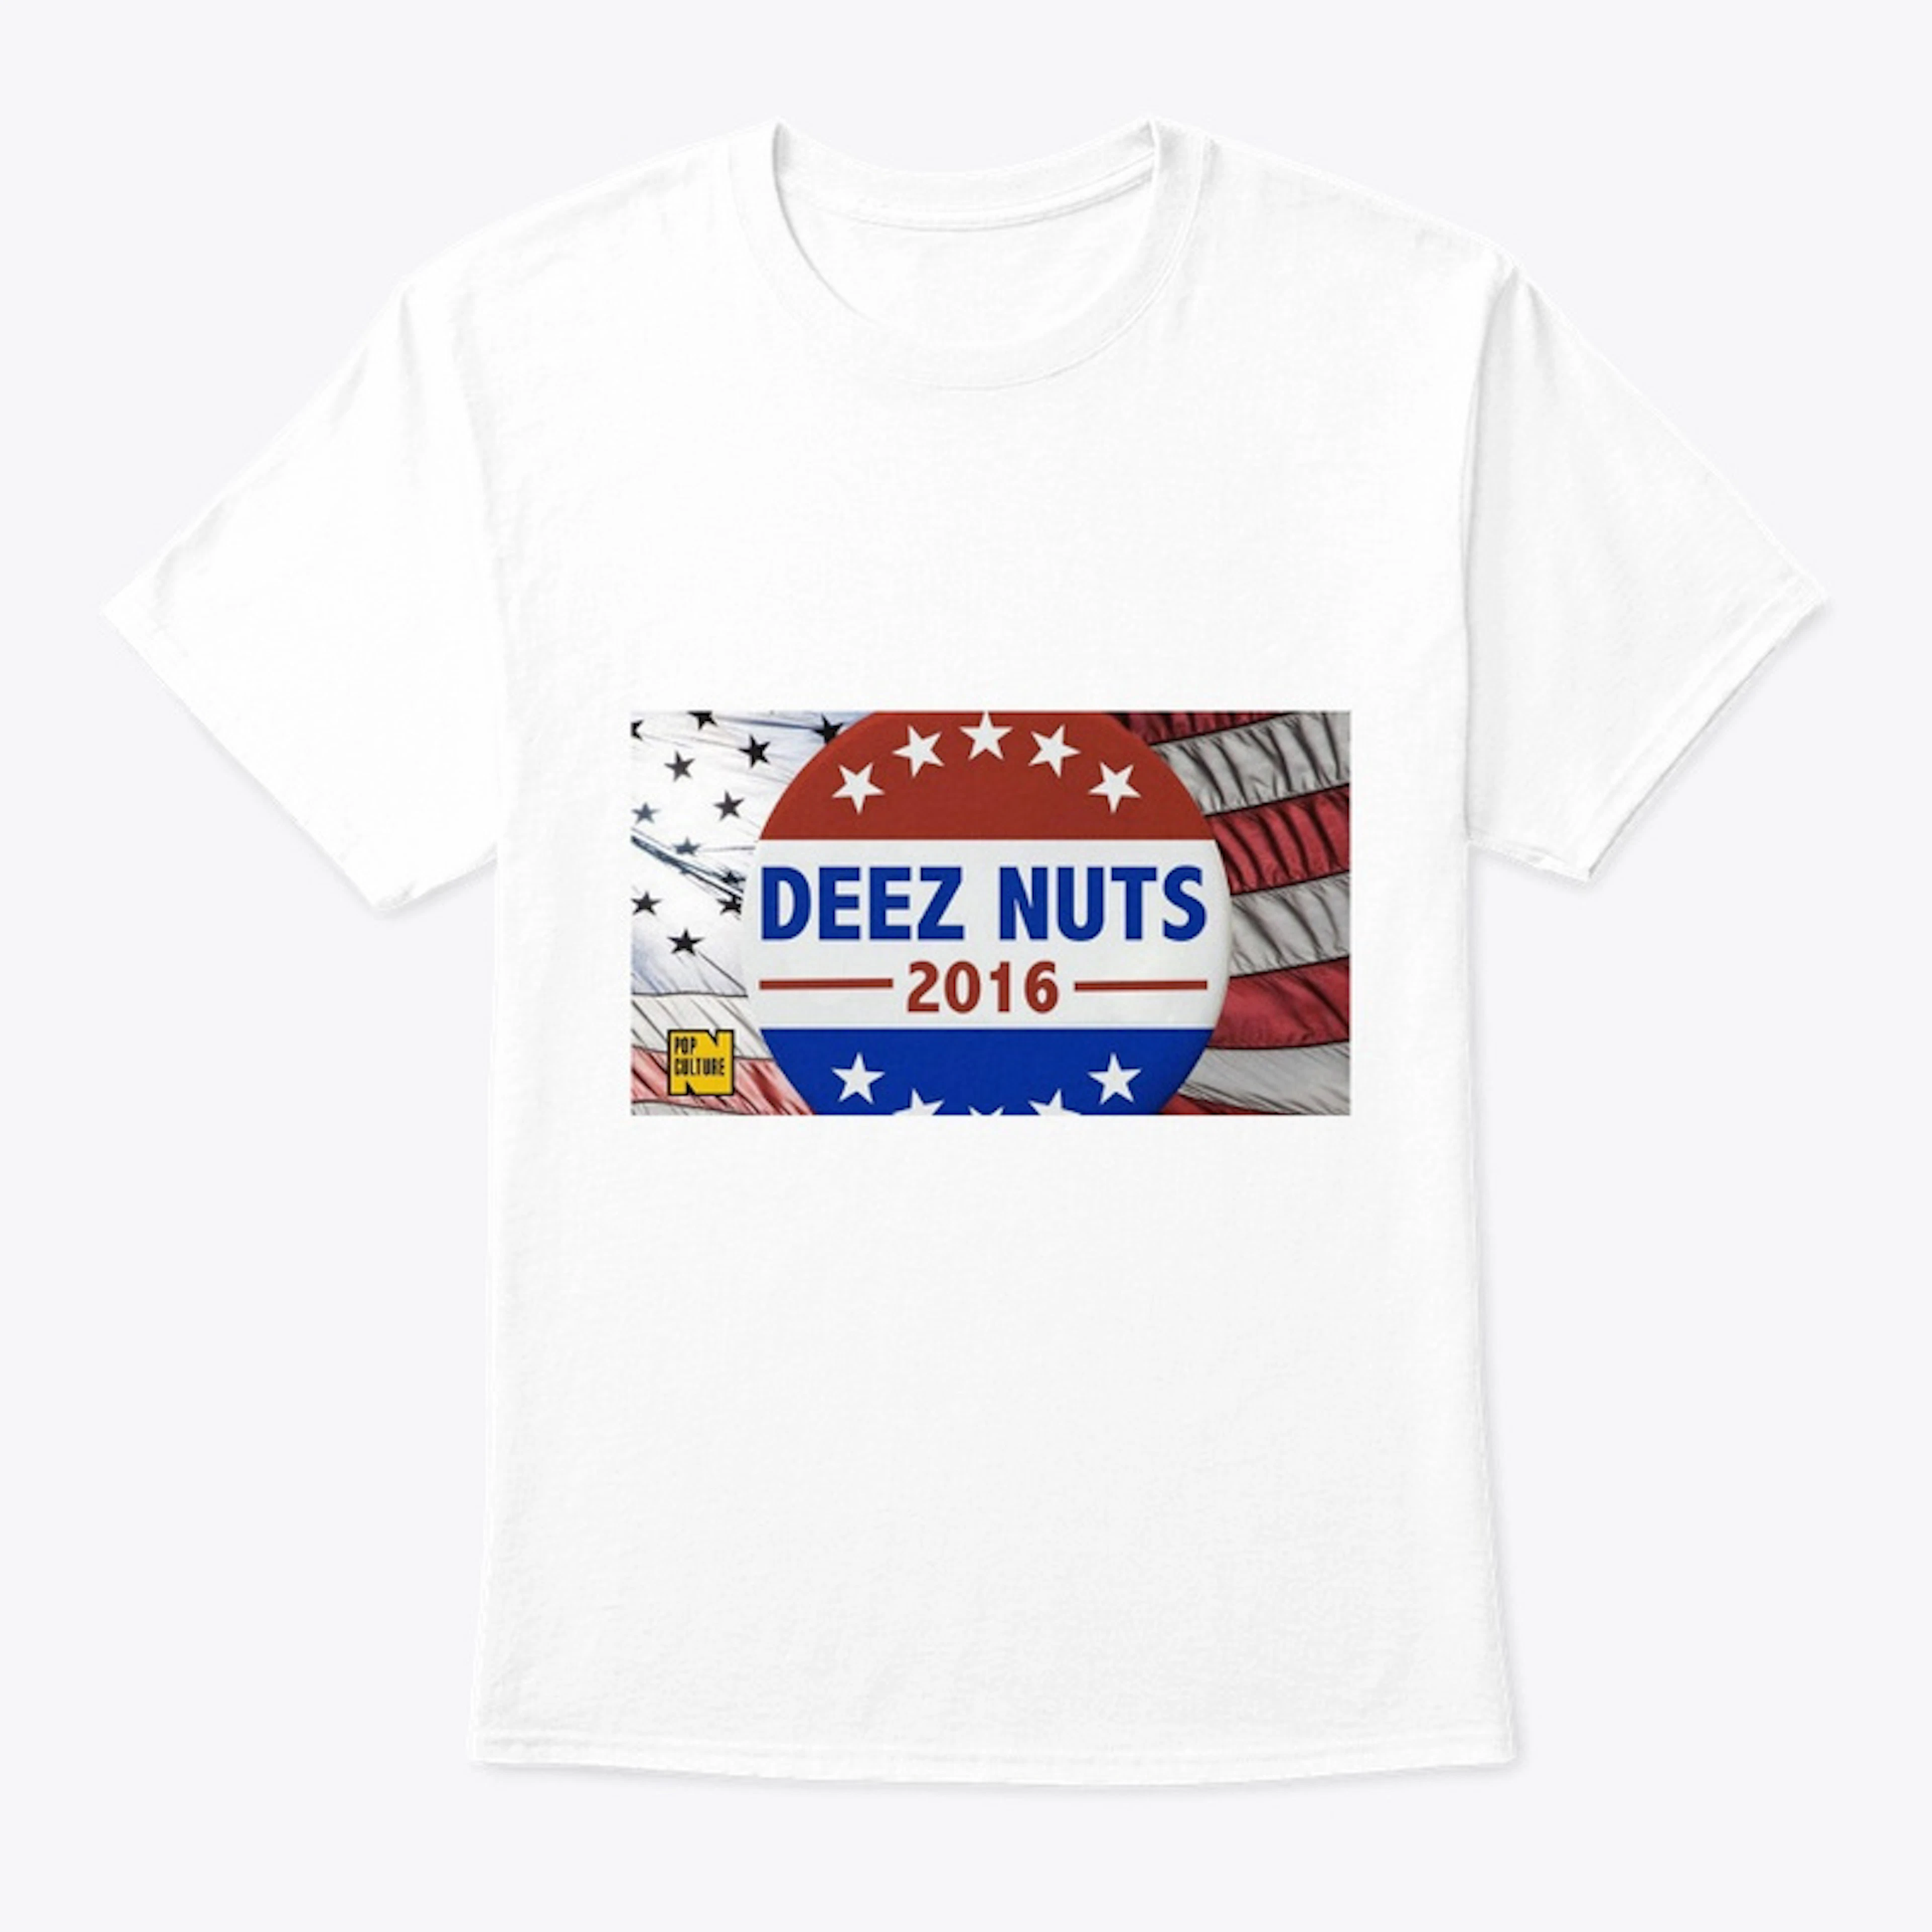 deez nuts t-shirt